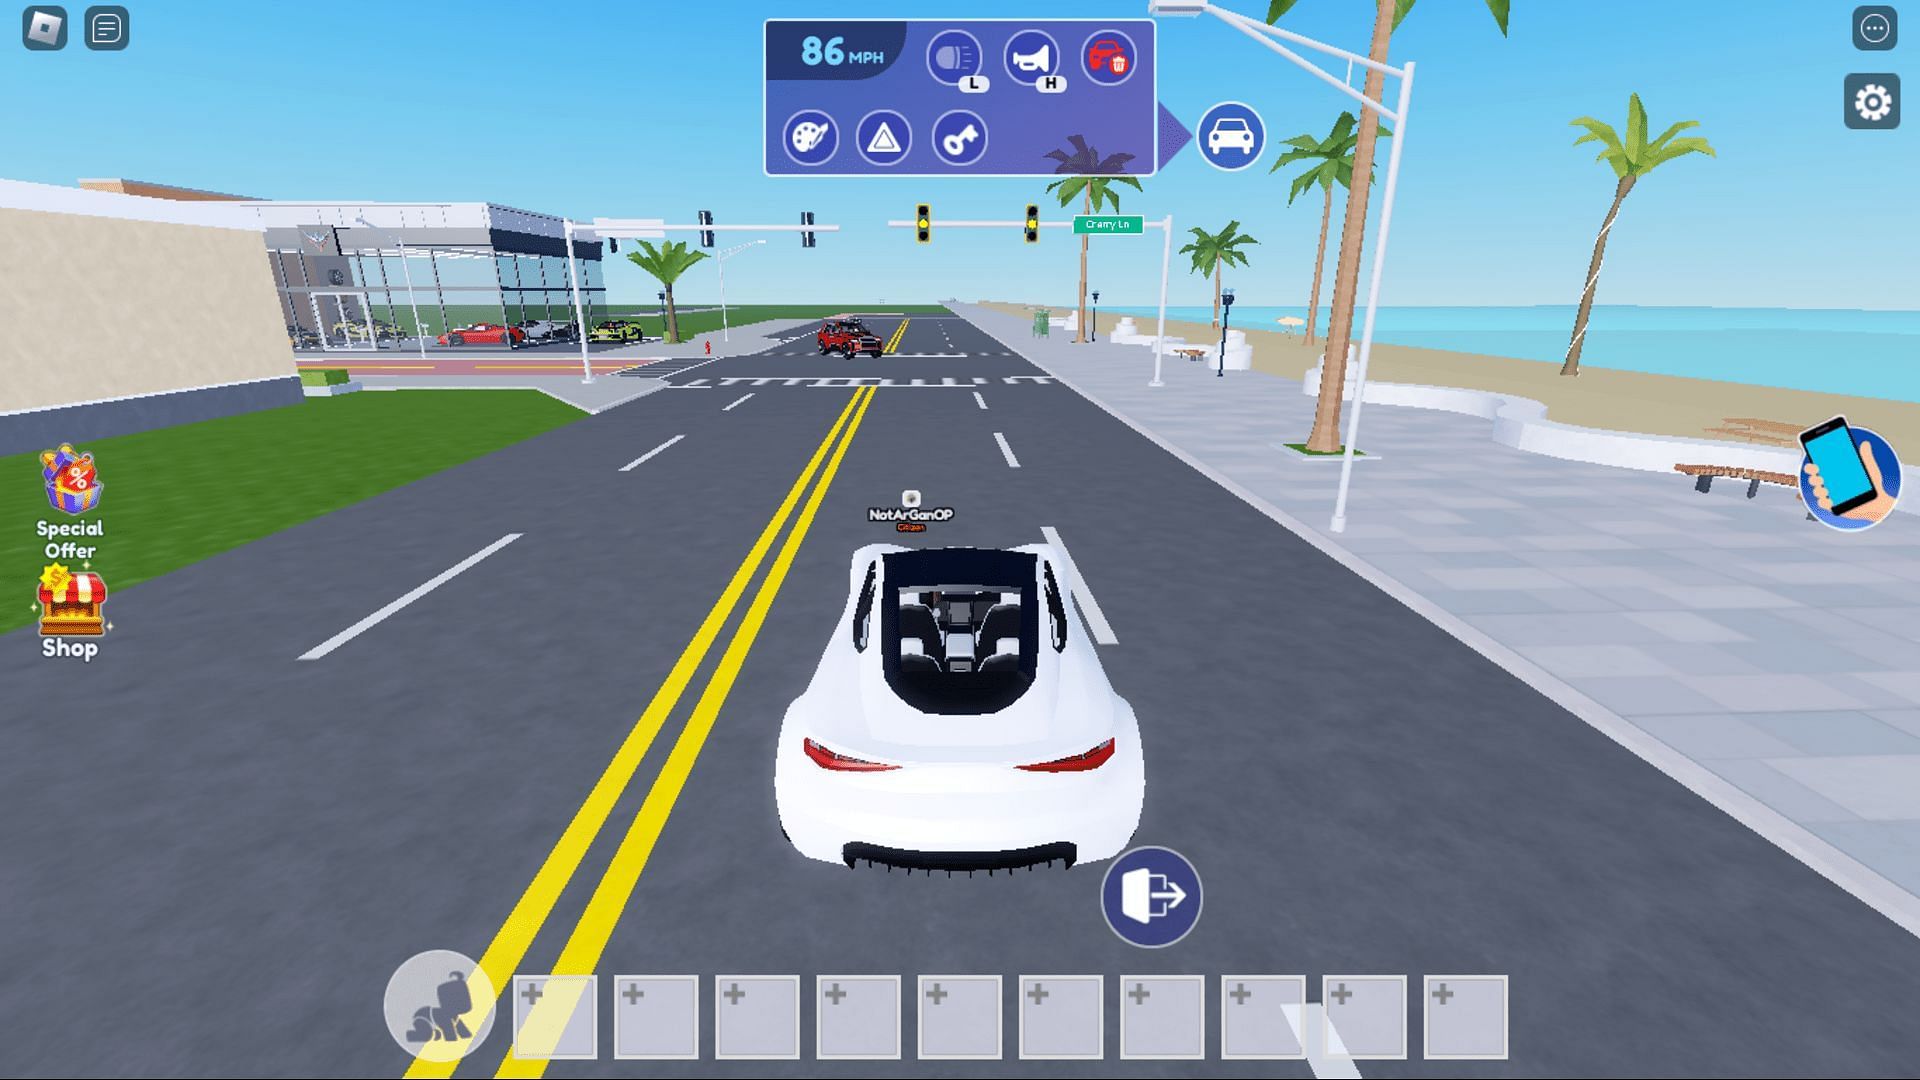 Gameplay screenshot from Seaside RP (Image via Roblox)